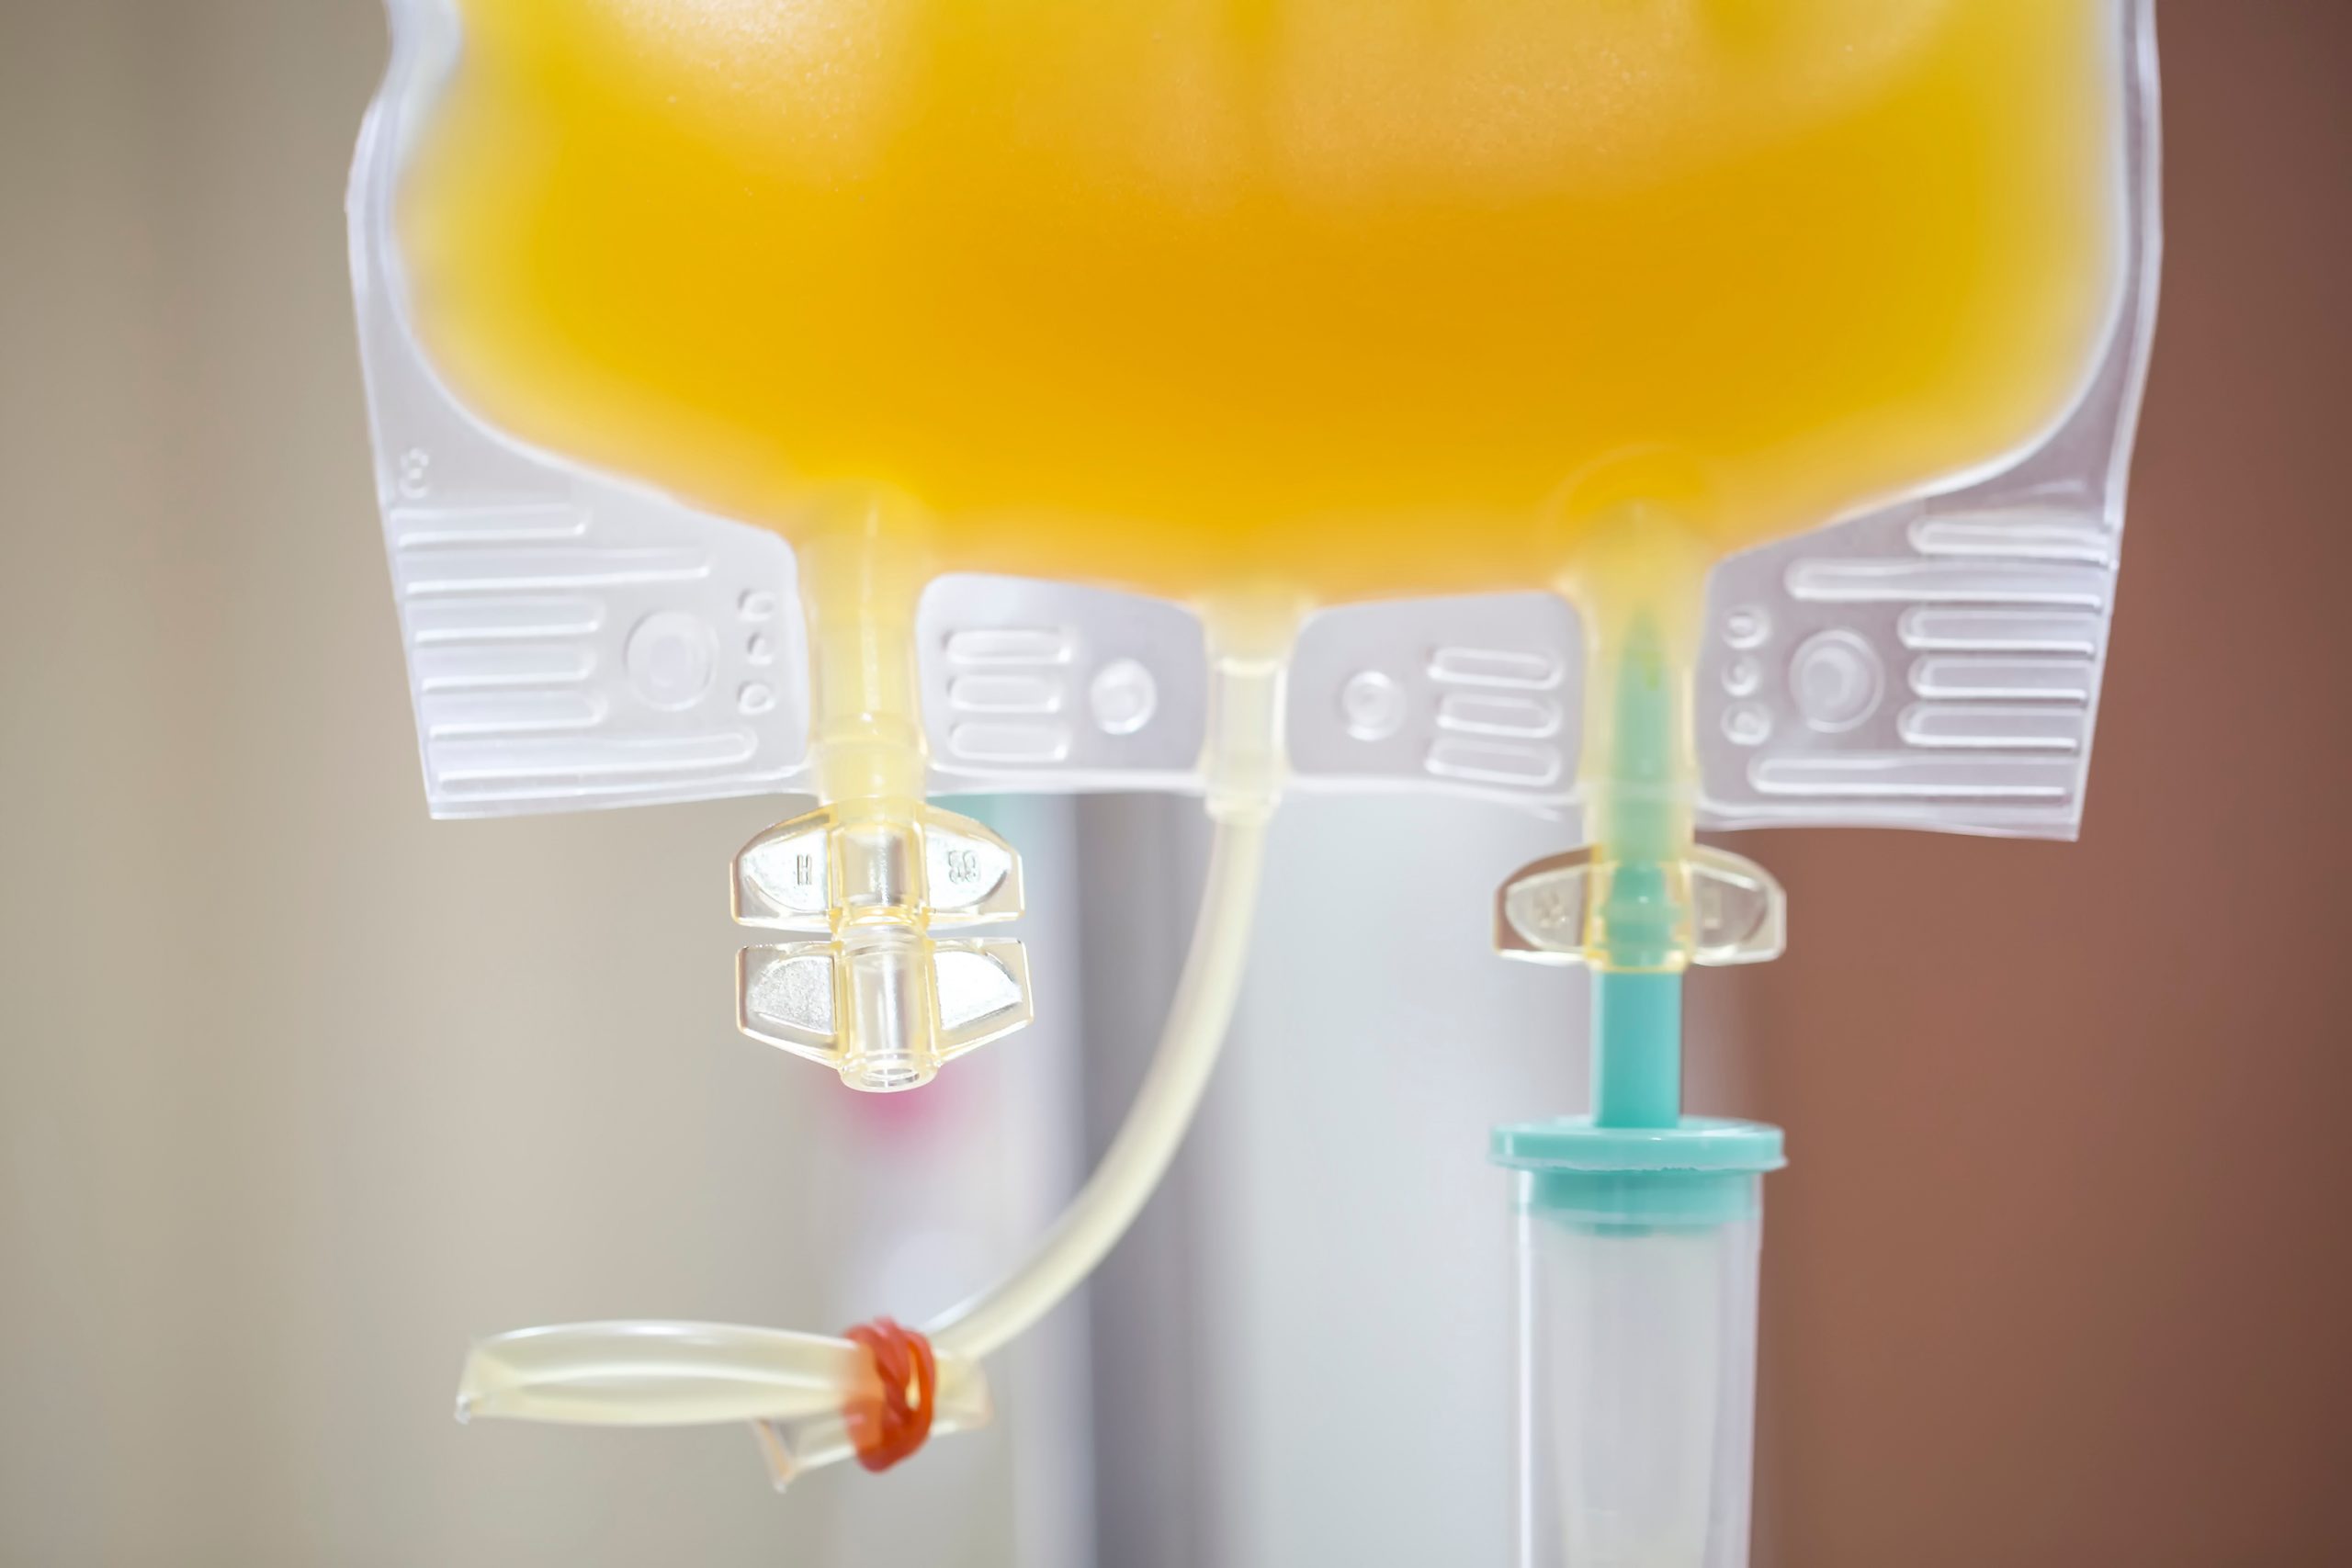 Platelet Transfusion Toolkit